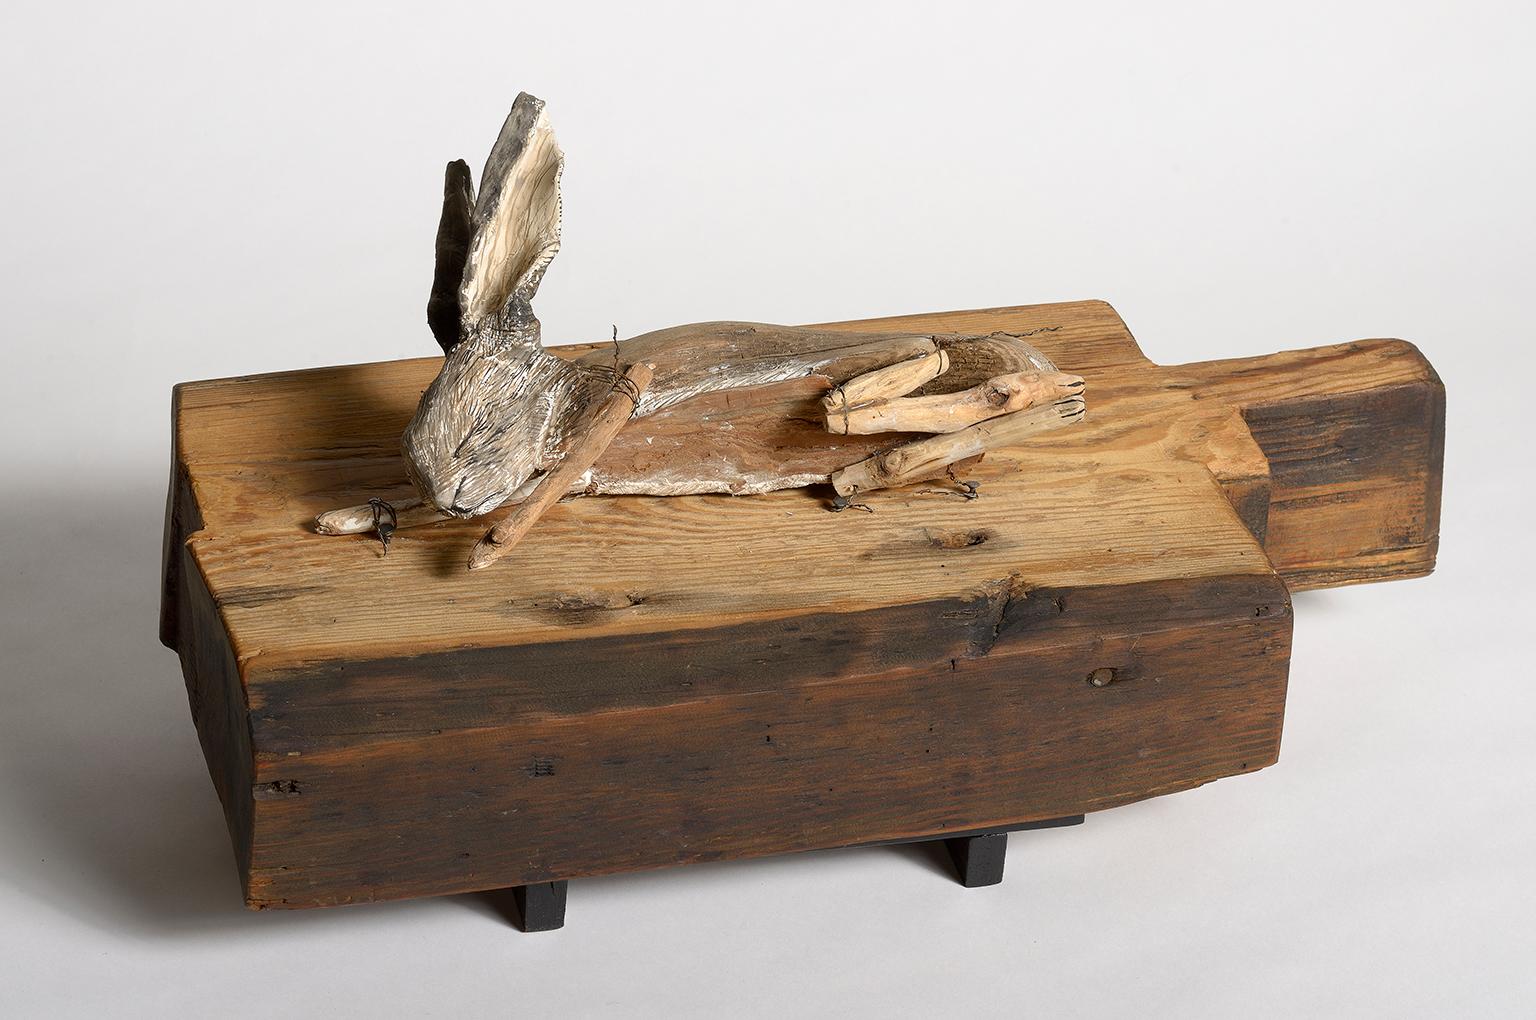 Rabbit on wood block, earth tone sculpture: 'The Tinder Box'